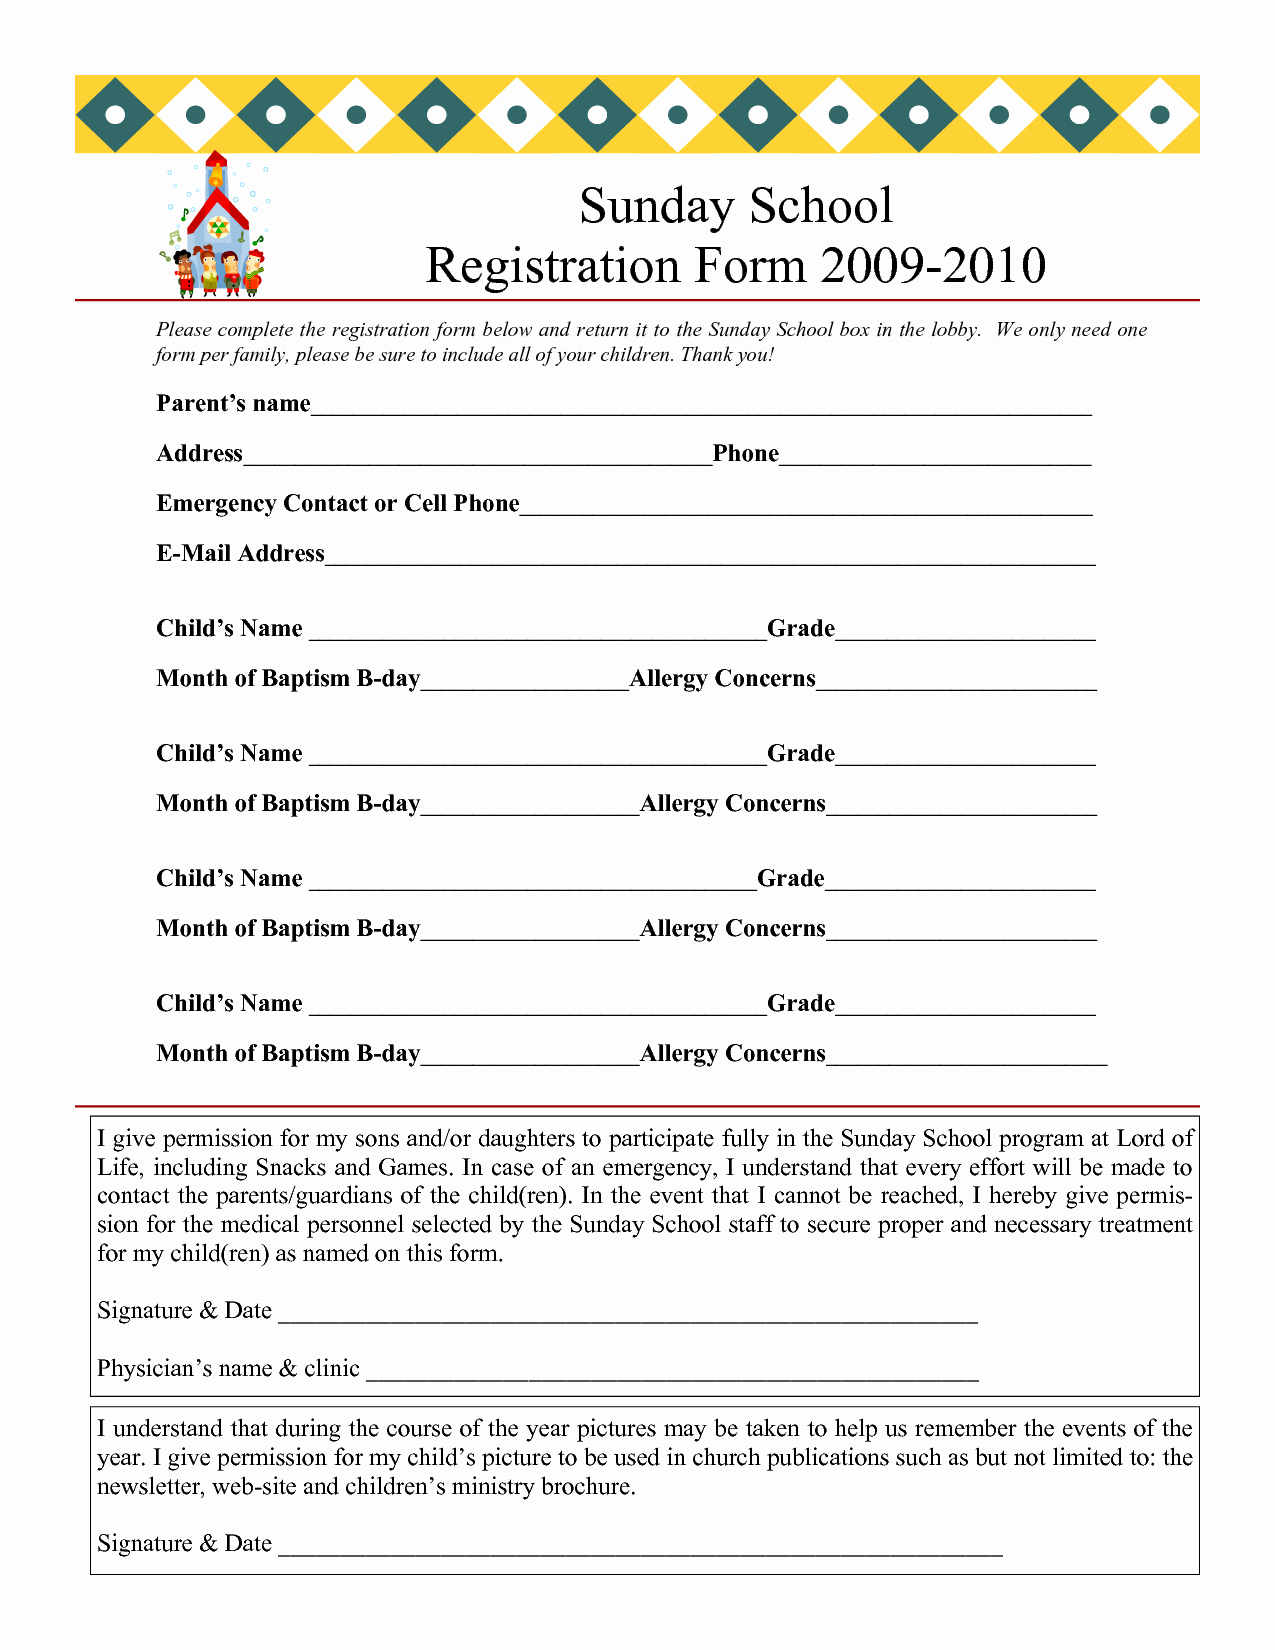 School Registration forms Template Elegant Sunday School Registration form 2009 2010